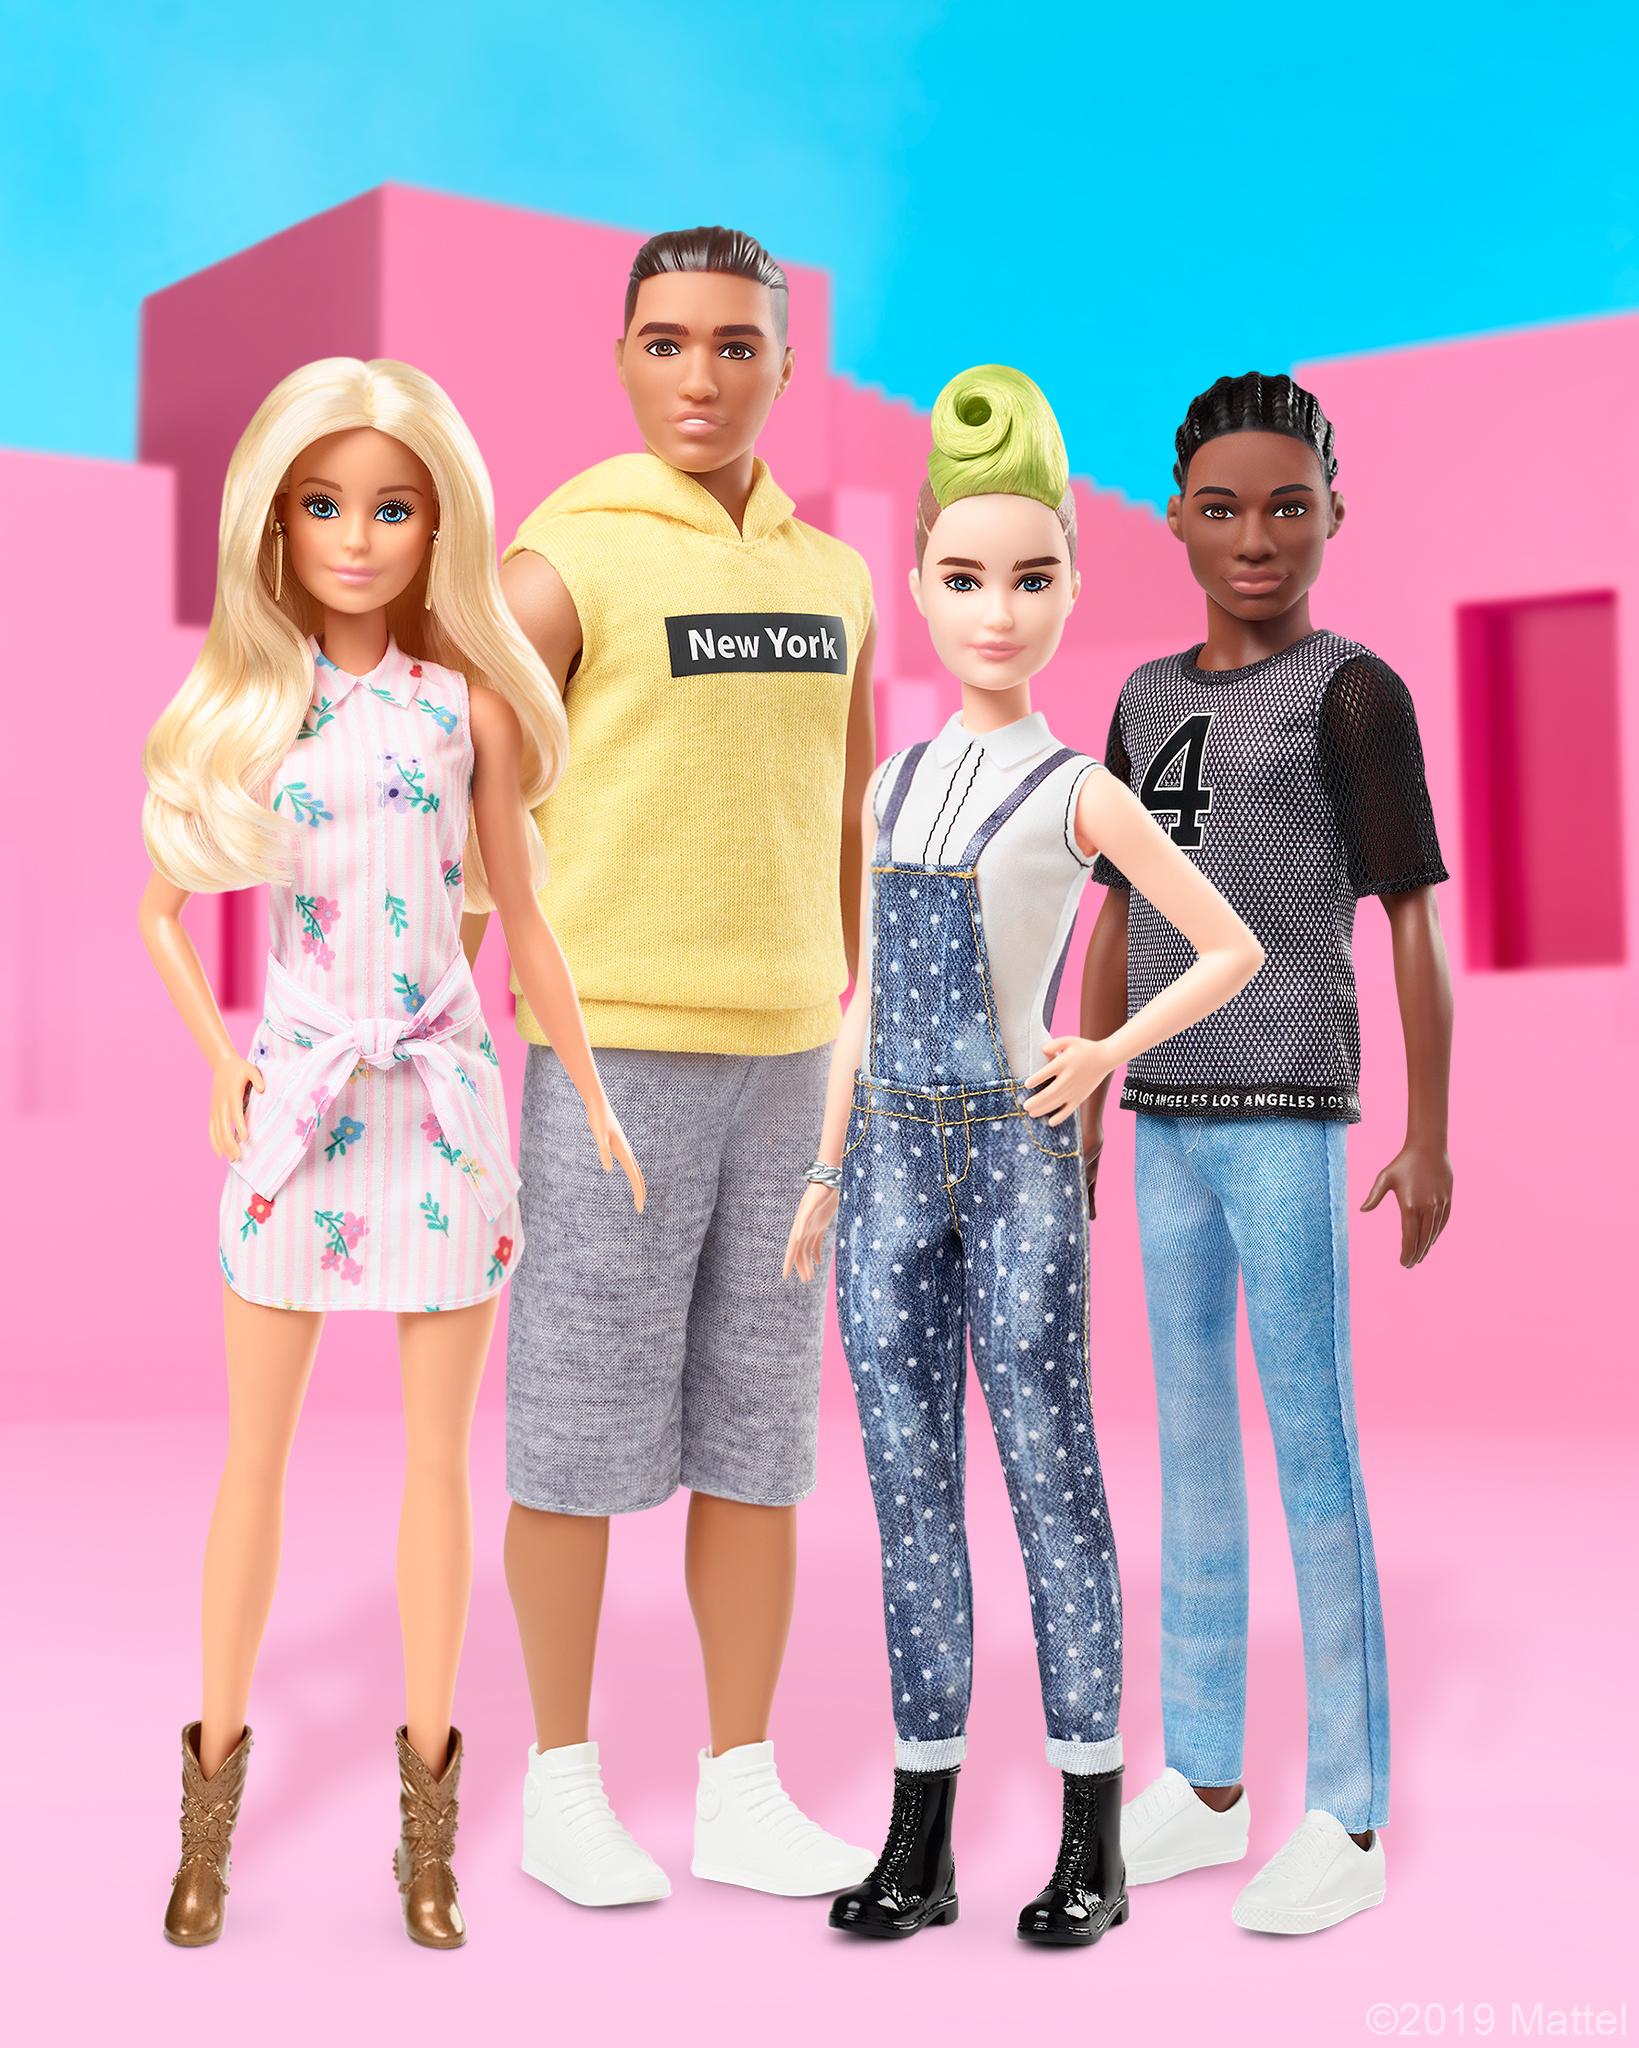 Barbie Twitter: "Stay true your crew! 🖤 Shop the new #Barbie # Fashionistas now: https://t.co/3viMJetimT. https://t.co/GOLIIs2ByU" / Twitter